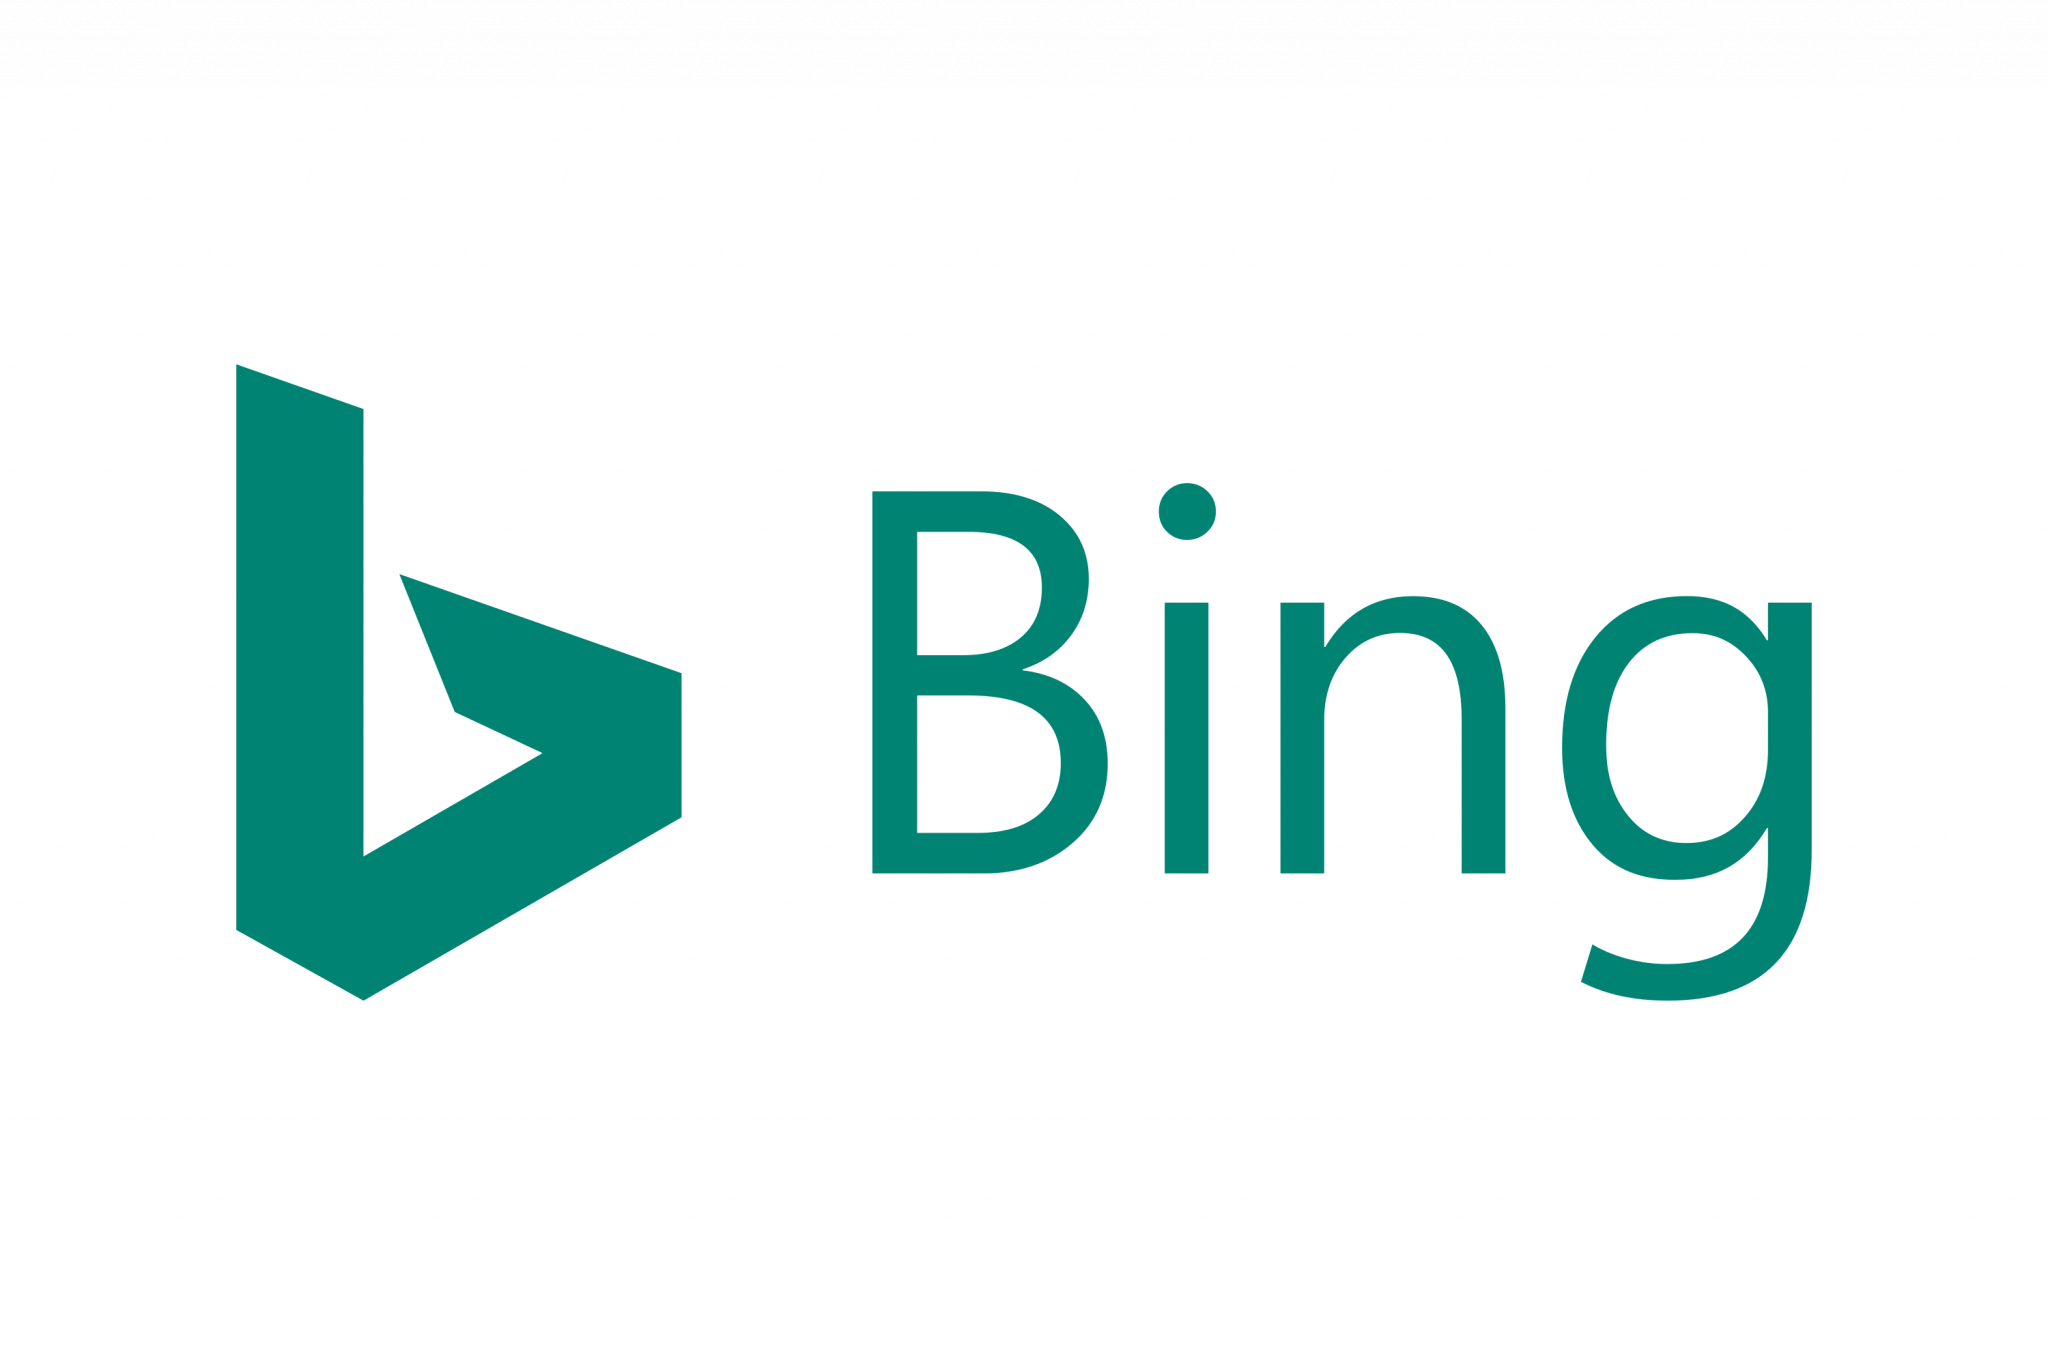 Bing ai image creator. Bing логотип. Бинг Поисковик. Microsoft Bing Поисковая система.